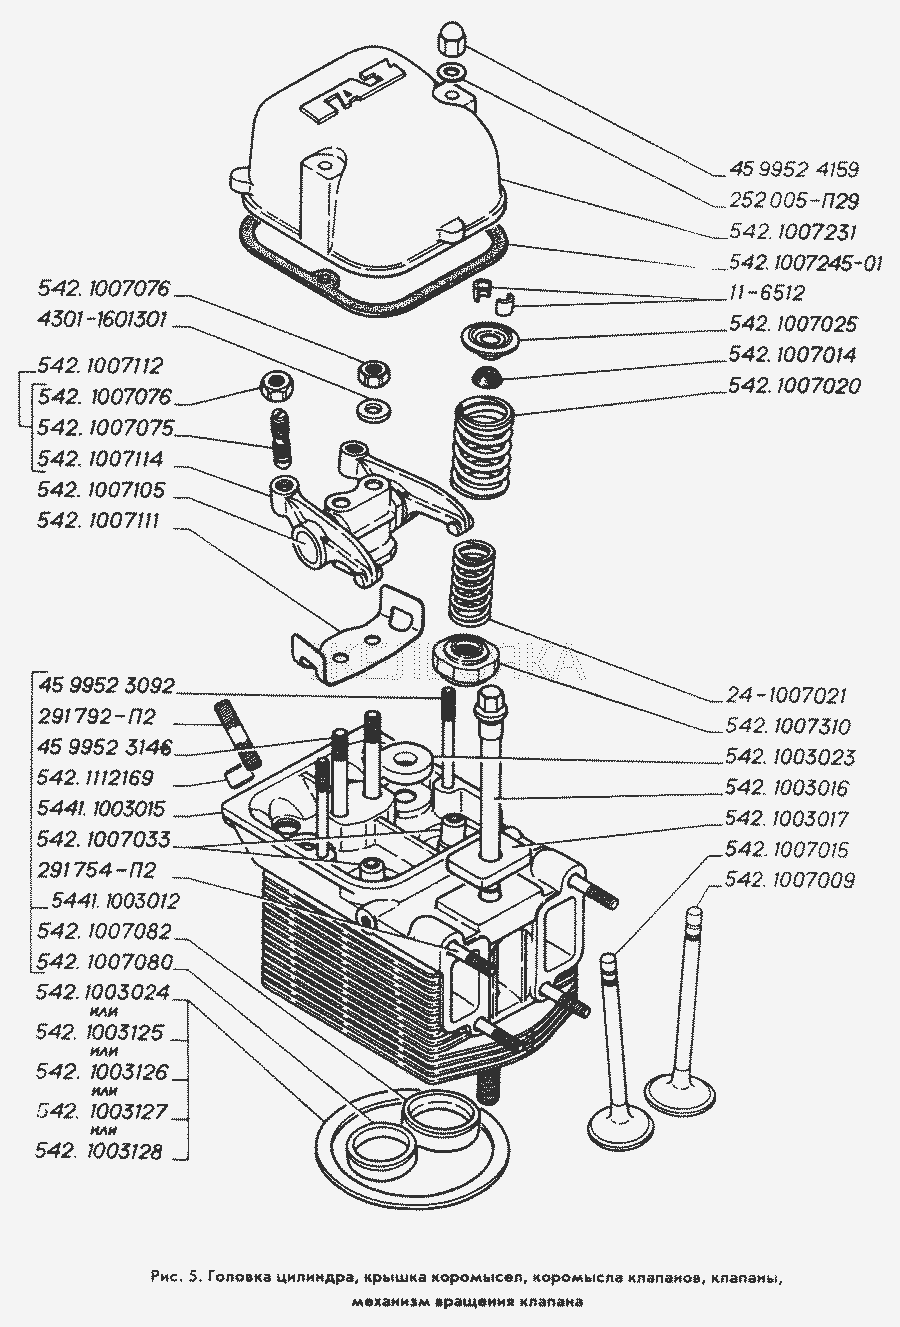 Головка цилиндра, крышка коромысел, коромысла клапанов, клапаны, механизм вращения клапана.  ГАЗ-3309